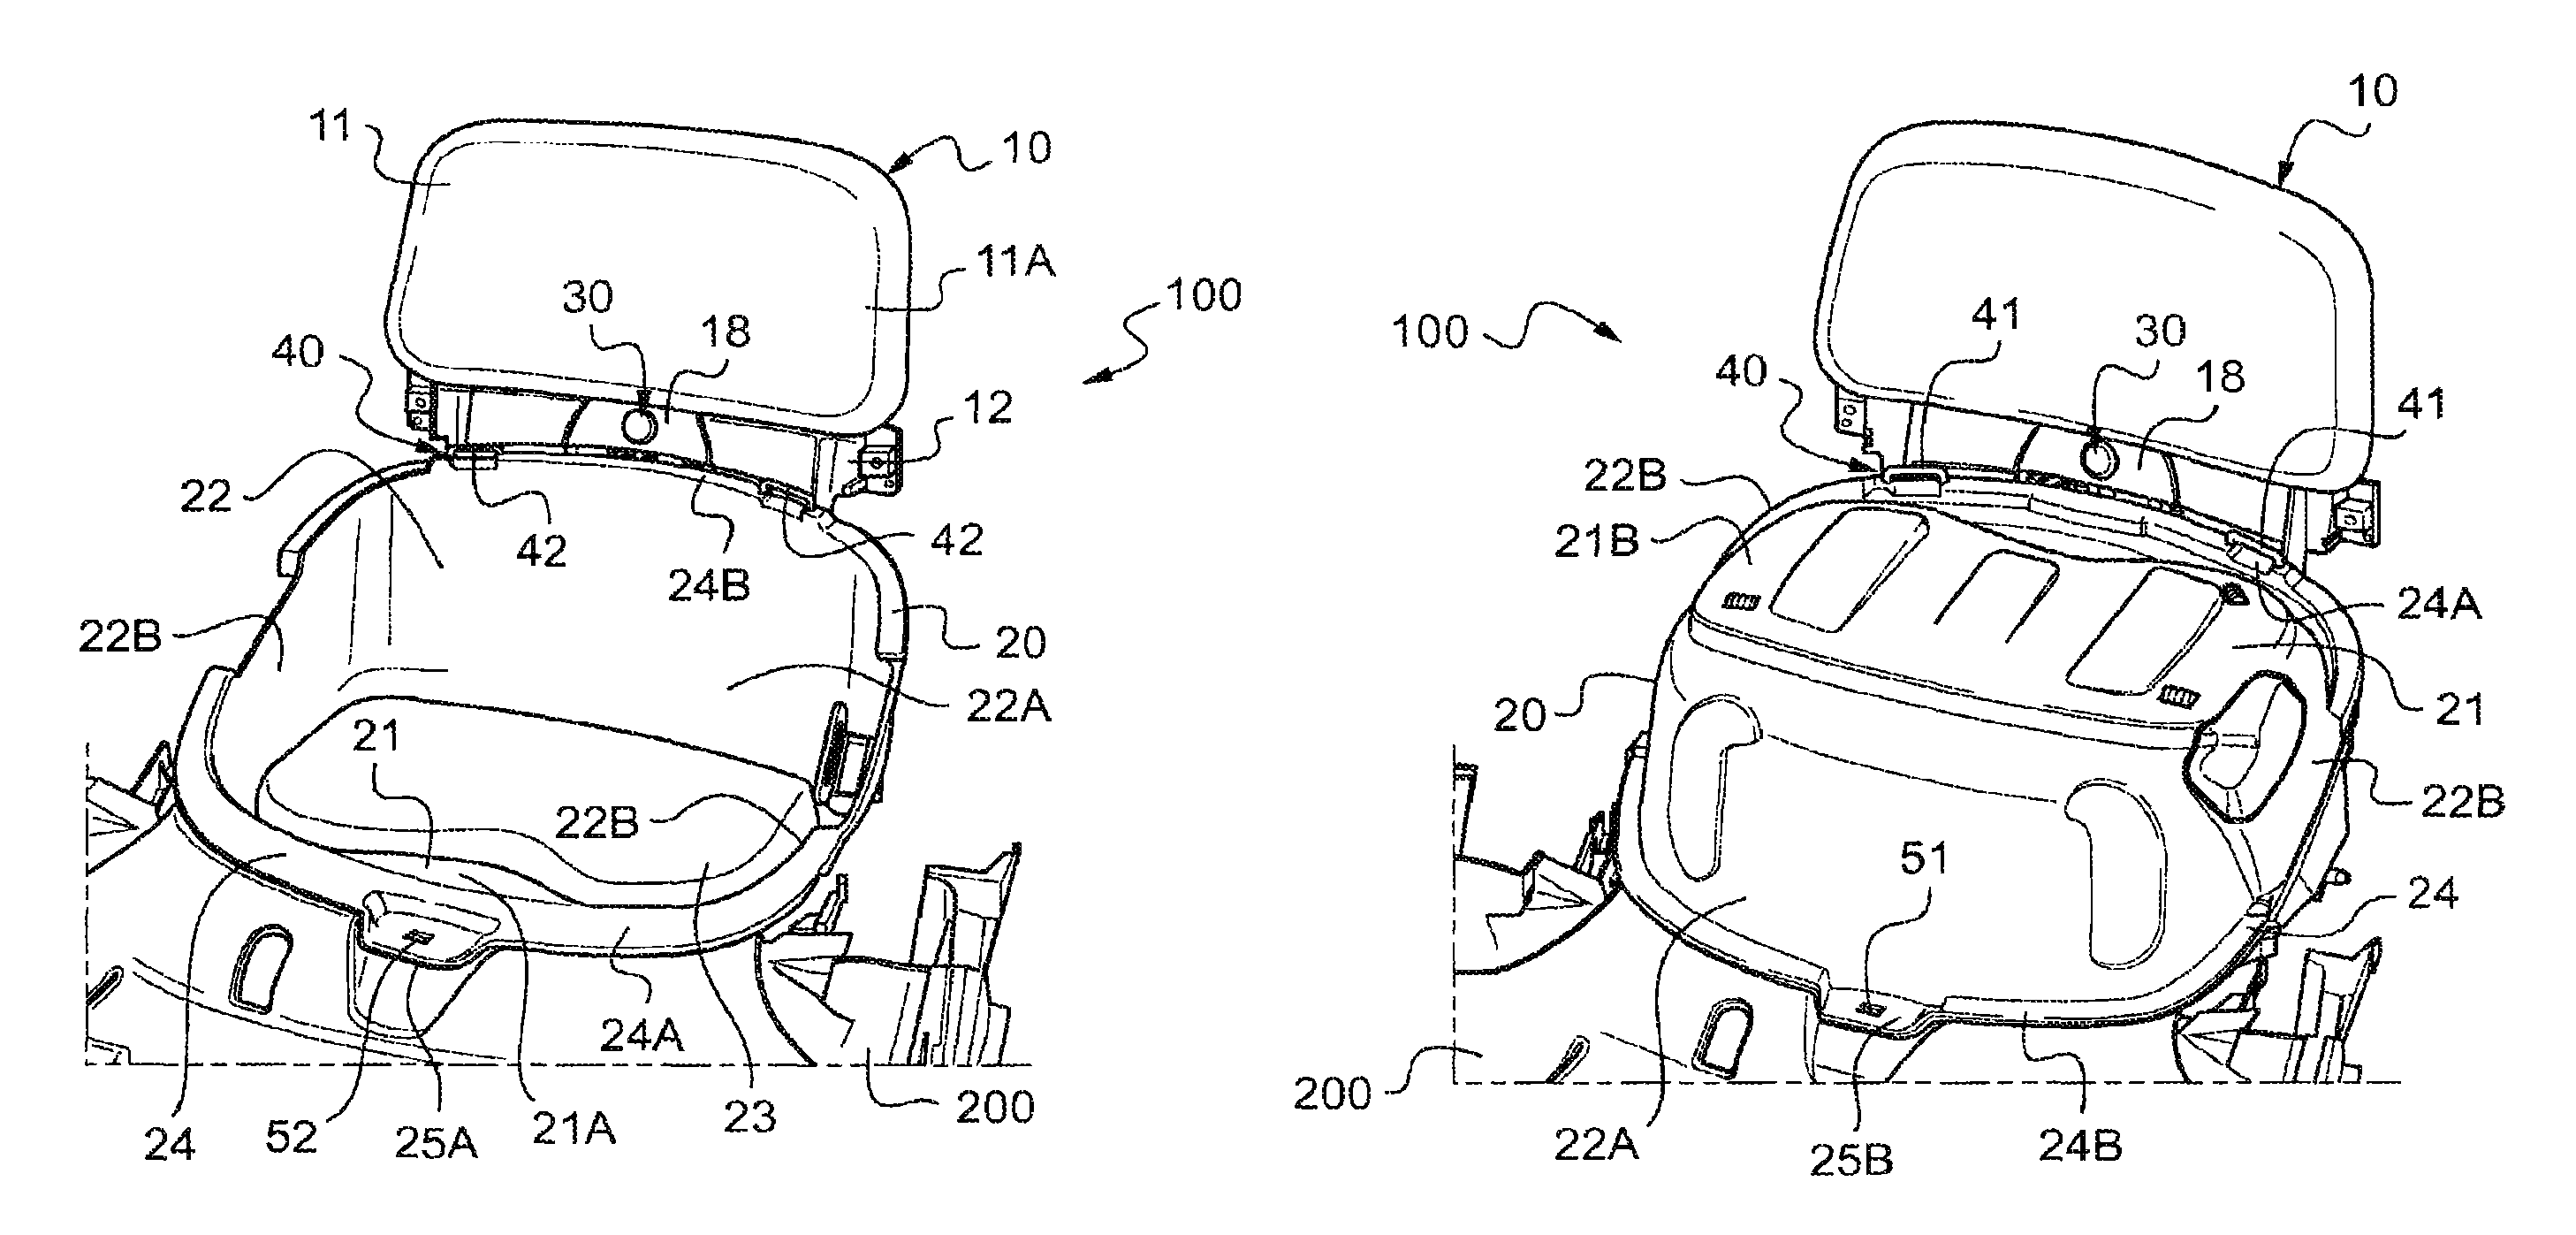 Motor vehicle seat having a reversible sitting part comprising locking means